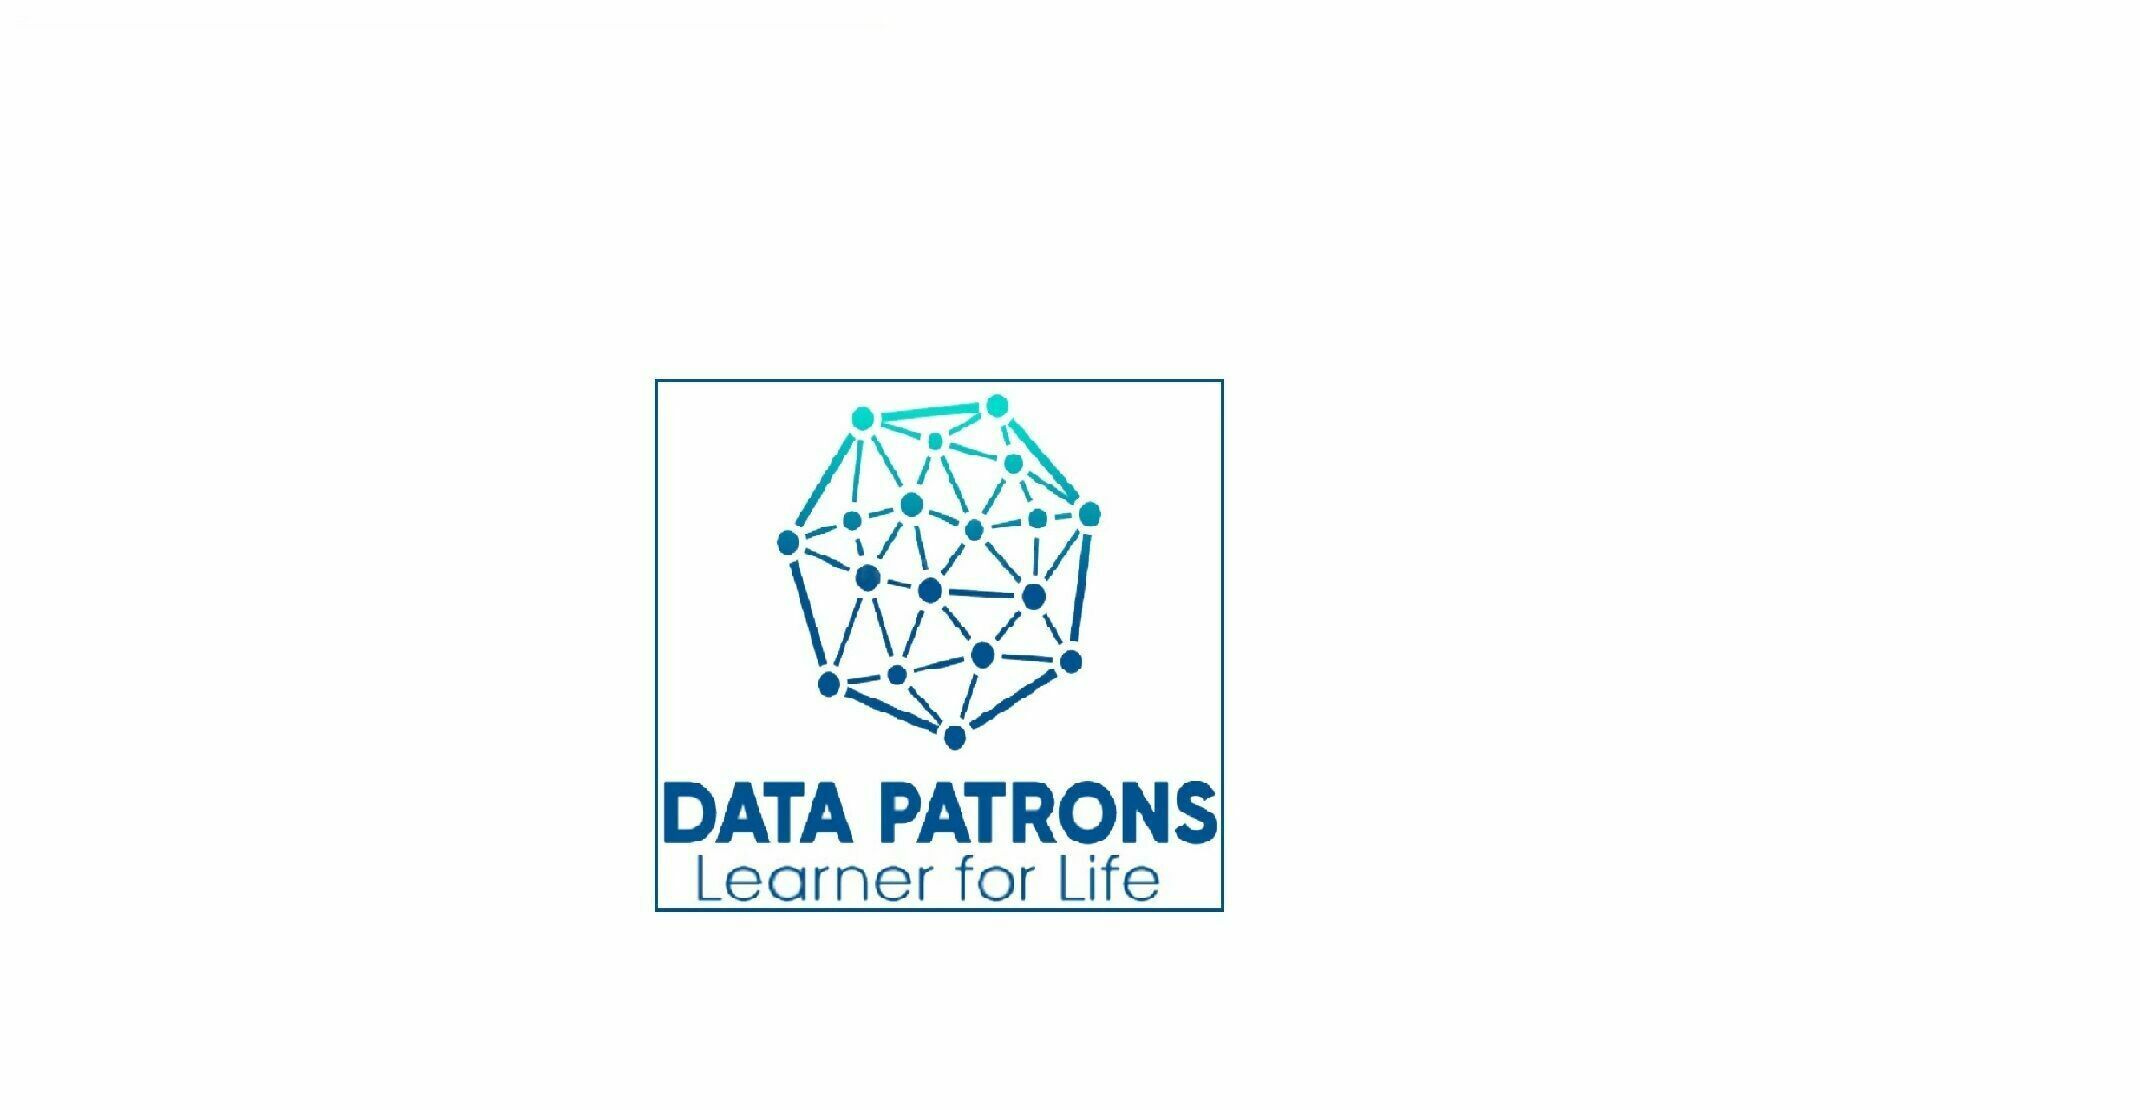 Avatar: Data patrons